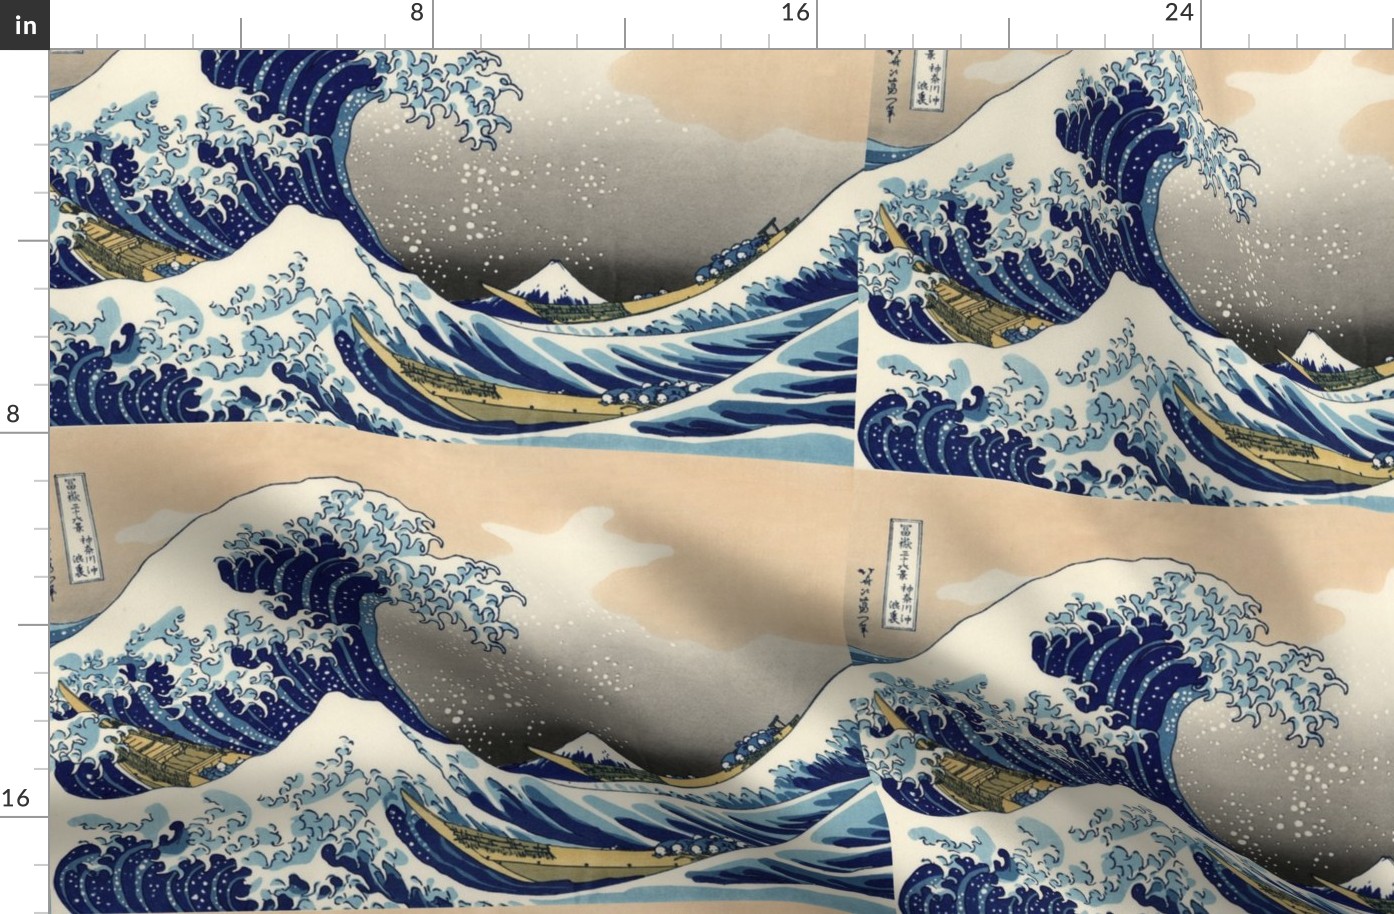 16" The Great Wave off Kanagawa Hokusai